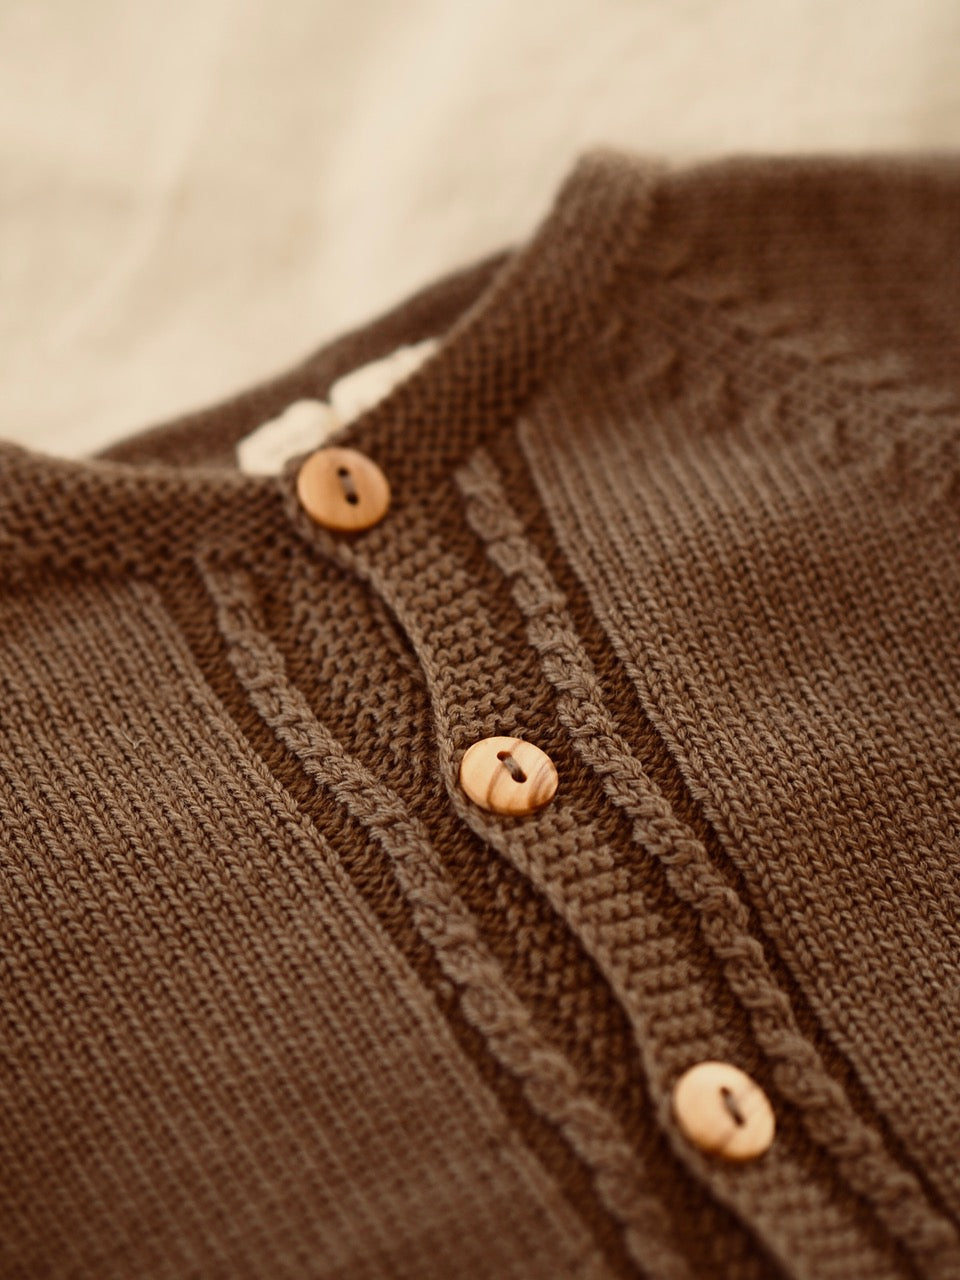 WEDOBLE Knitted Cardigan,Wool Brun